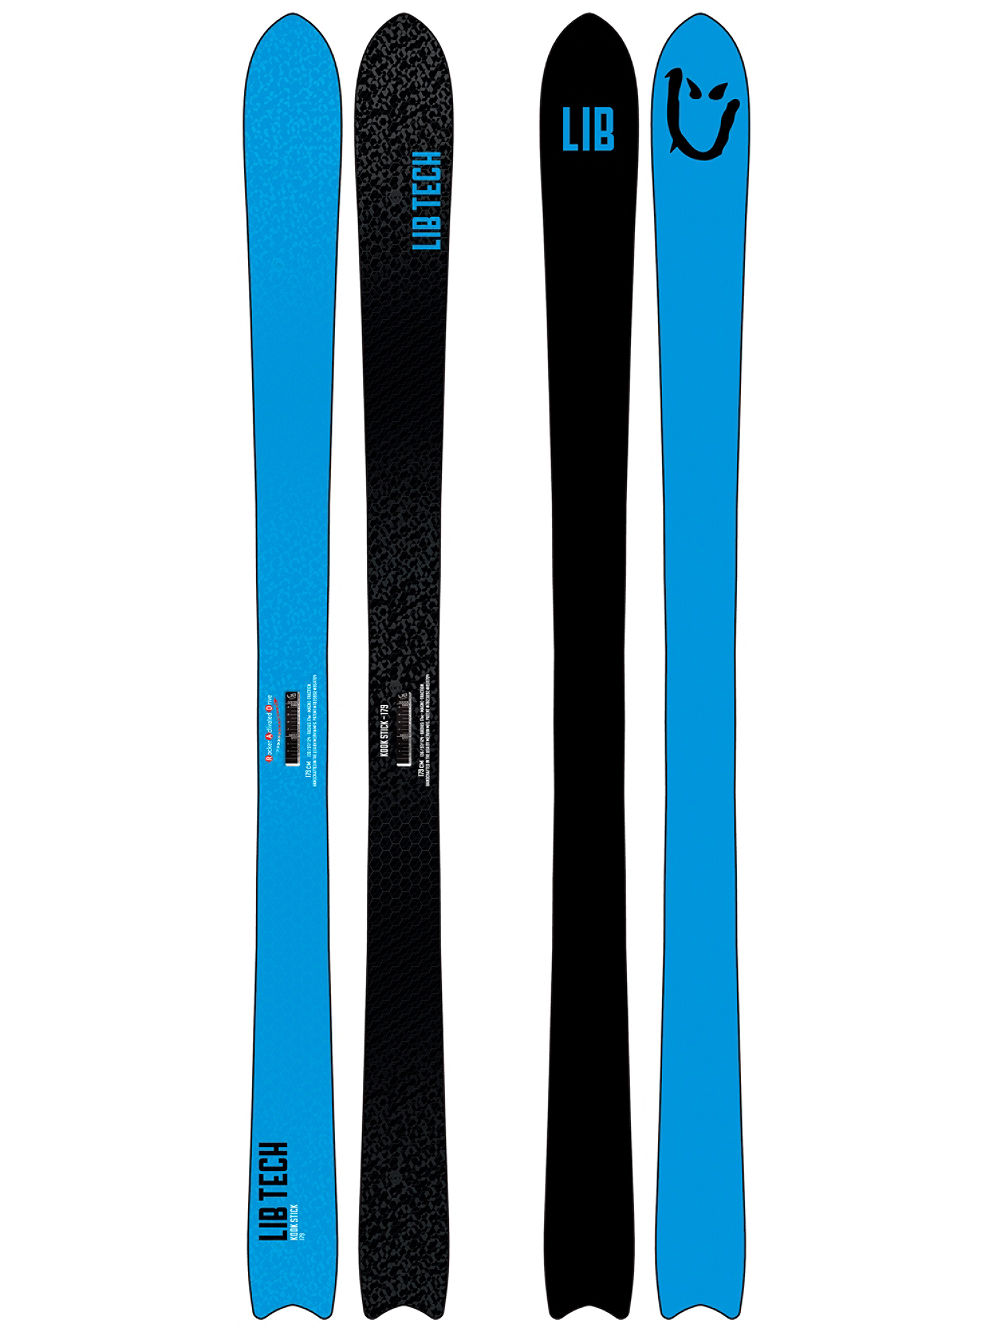 Kook Stick 97mm 186 2022 Skis